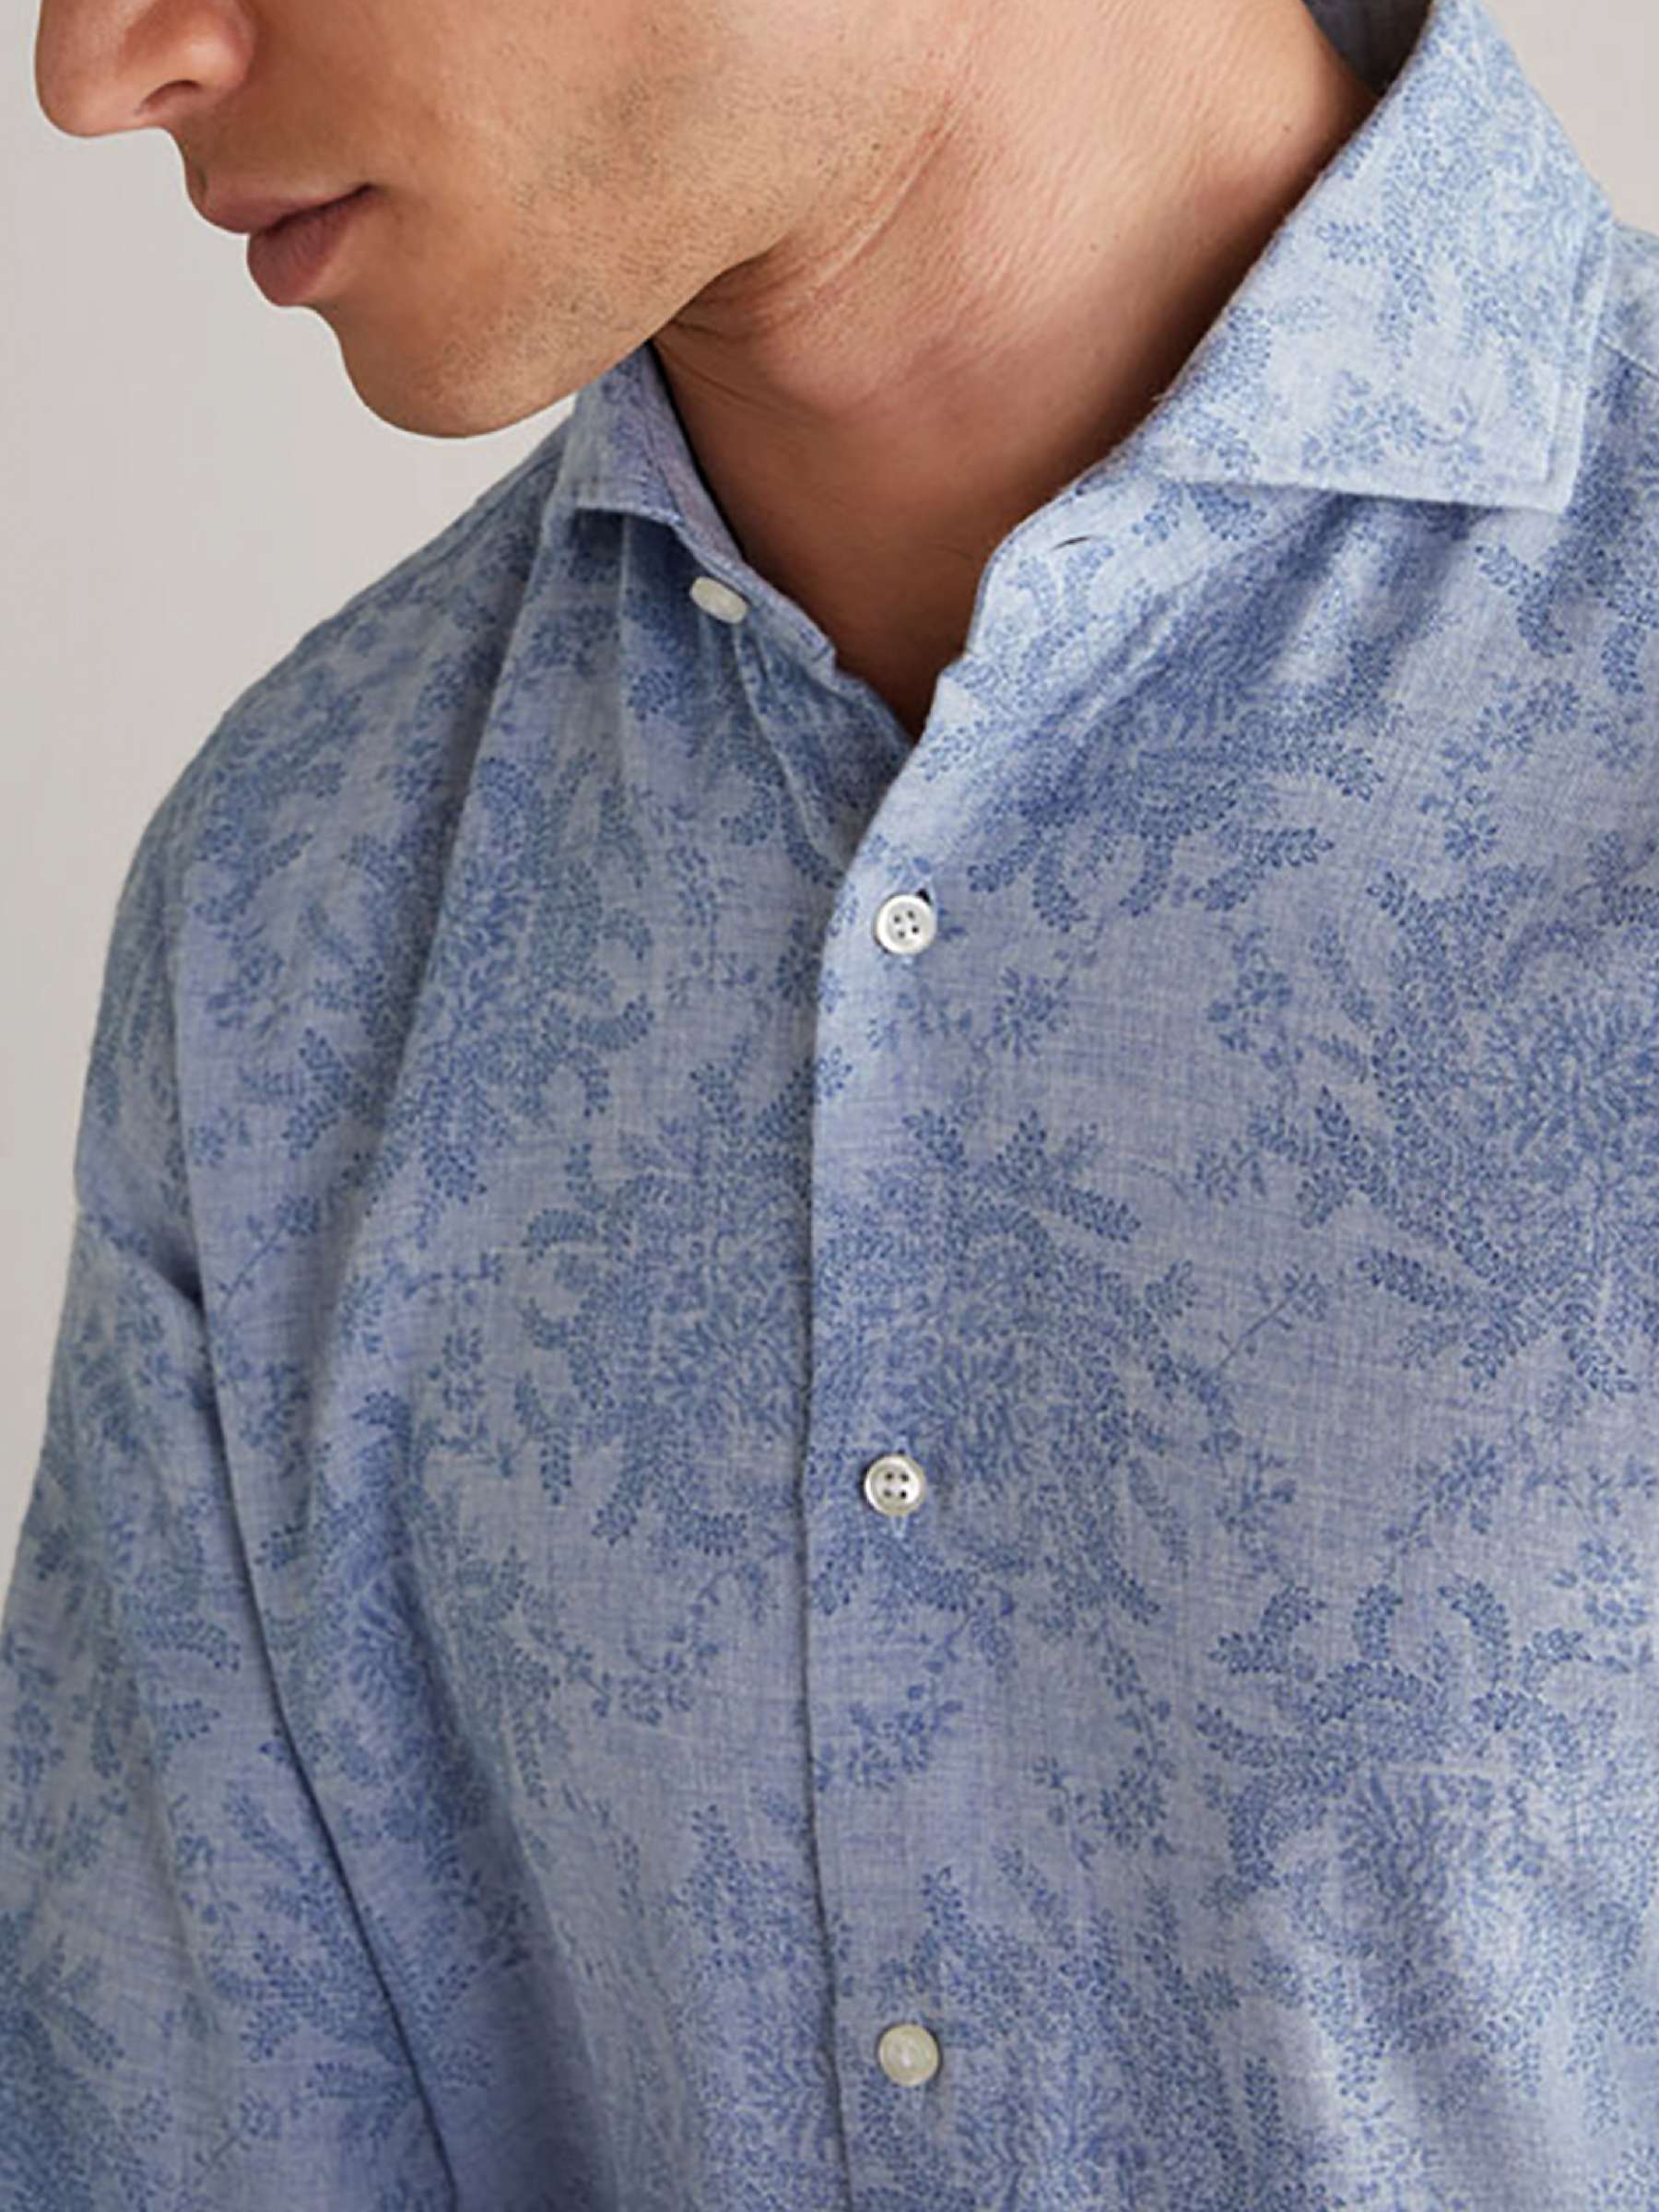 Buy JOOP! Paisley Print Cotton and Wool Blend Shirt, Medium Blue Online at johnlewis.com